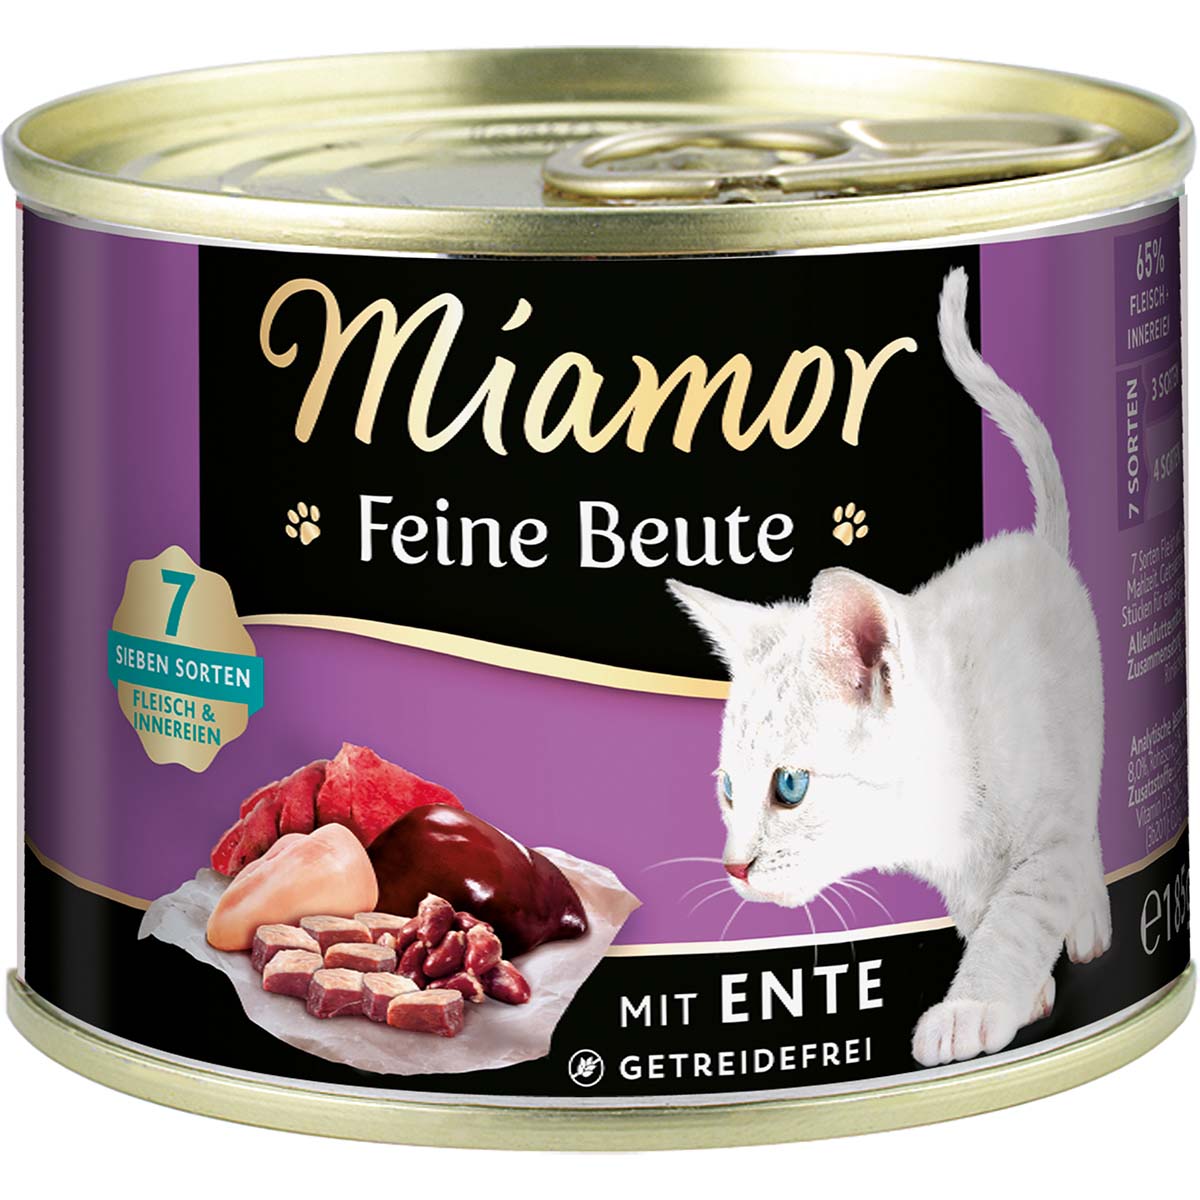 Miamor Feine Beute Ente 24x185g von Miamor